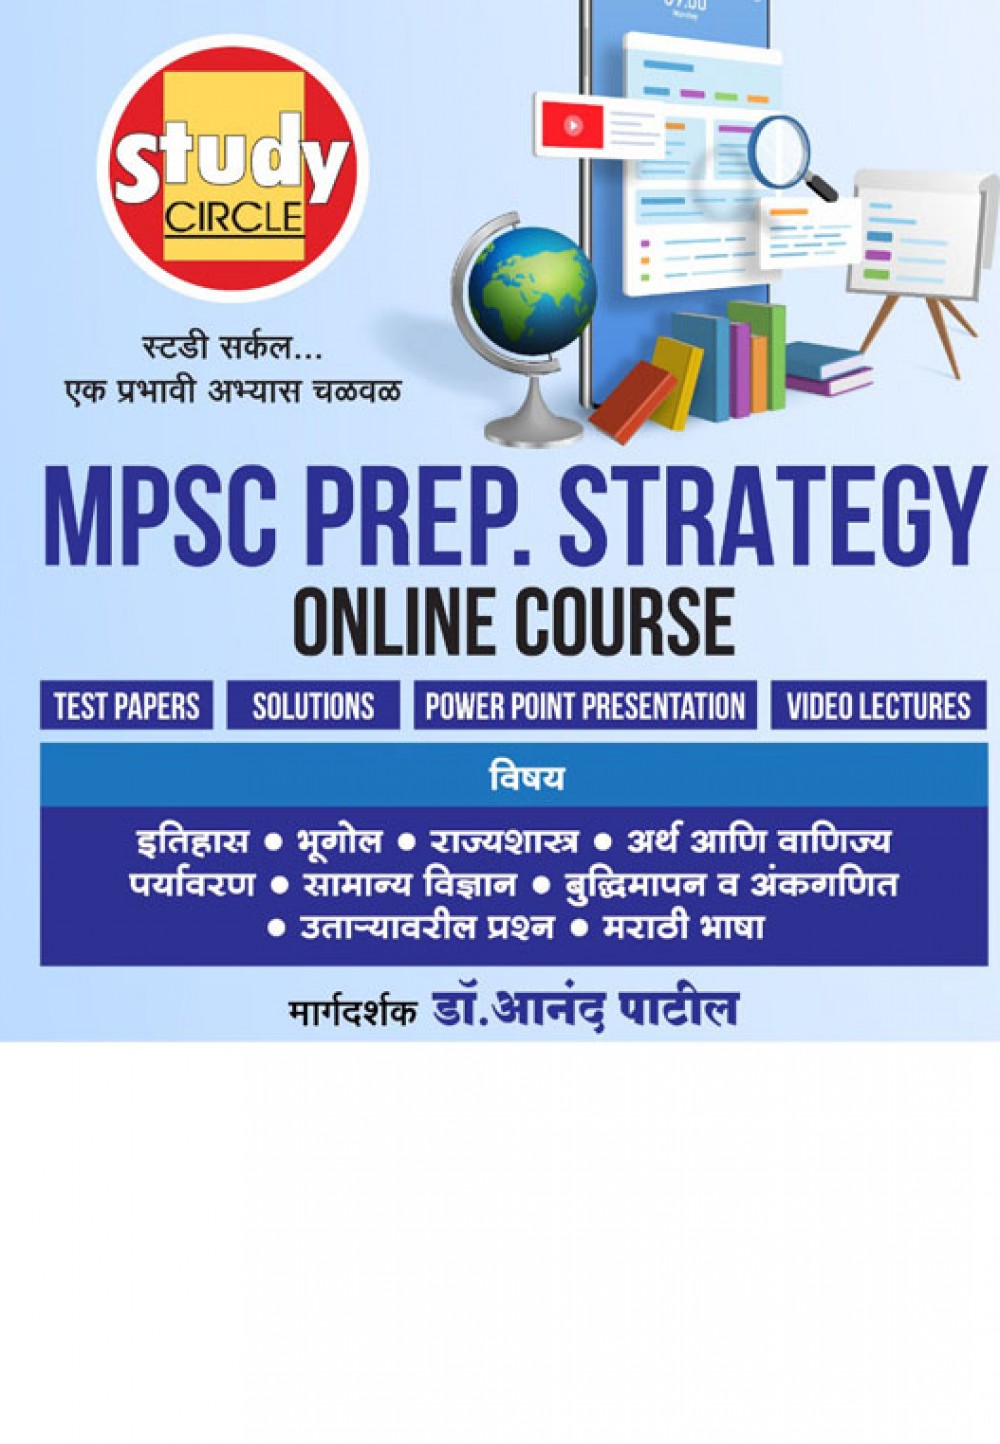 MPSC Prep Strategy Online Course 